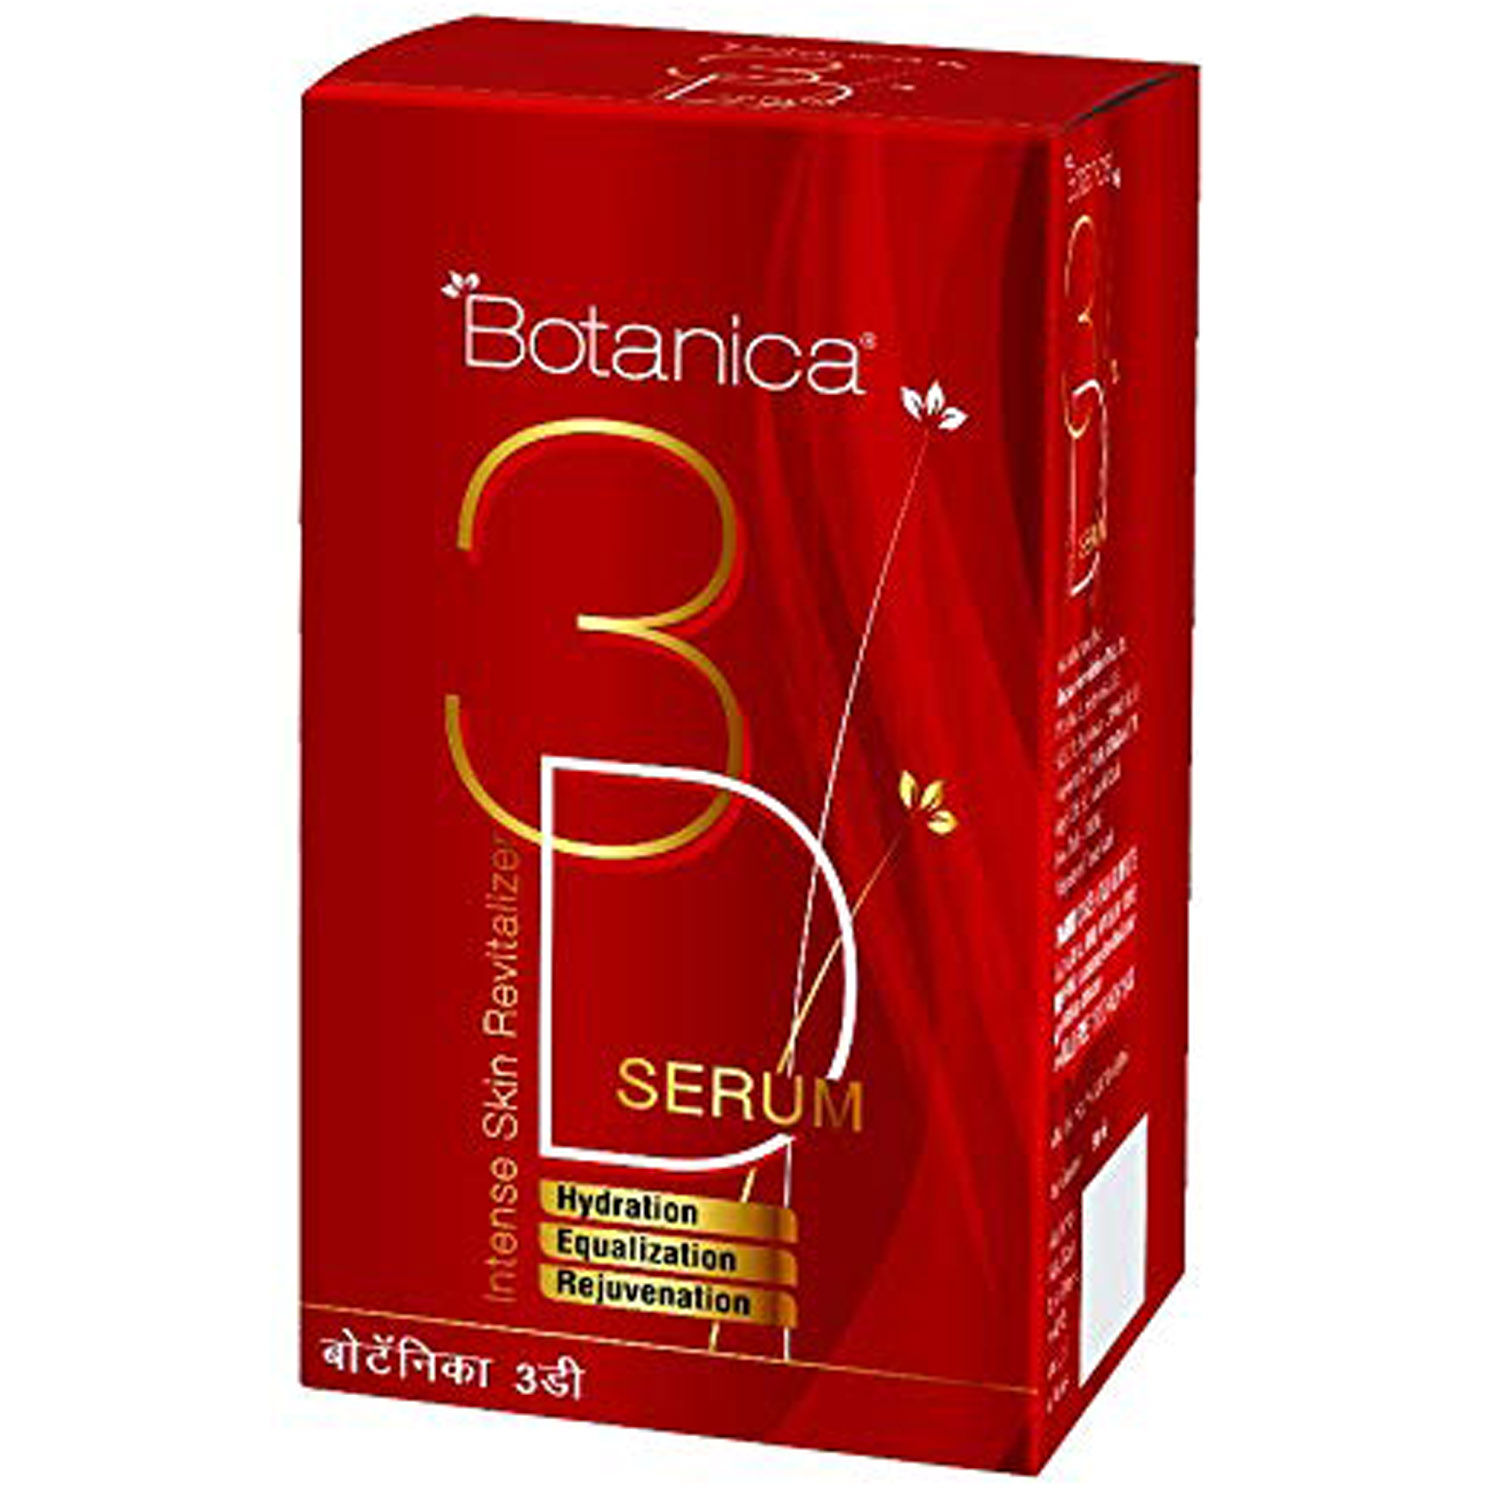 Botanica 3D Serum, 30 ml, Pack of 1 